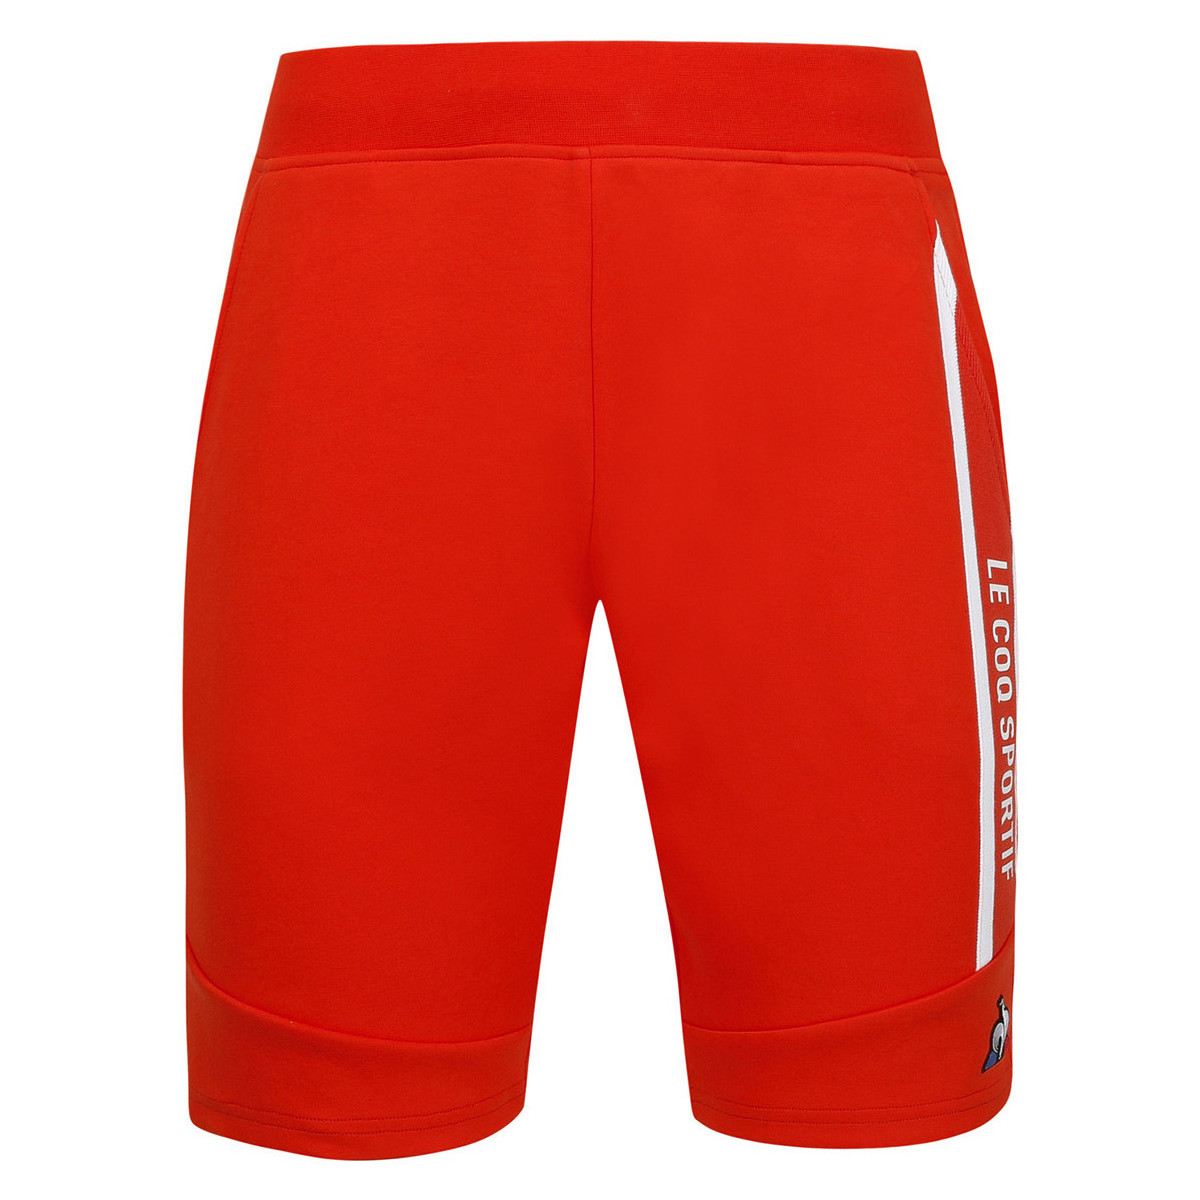 Textil Muži Kraťasy / Bermudy Le Coq Sportif Saison 1 Short Regular N°2 Oranžová